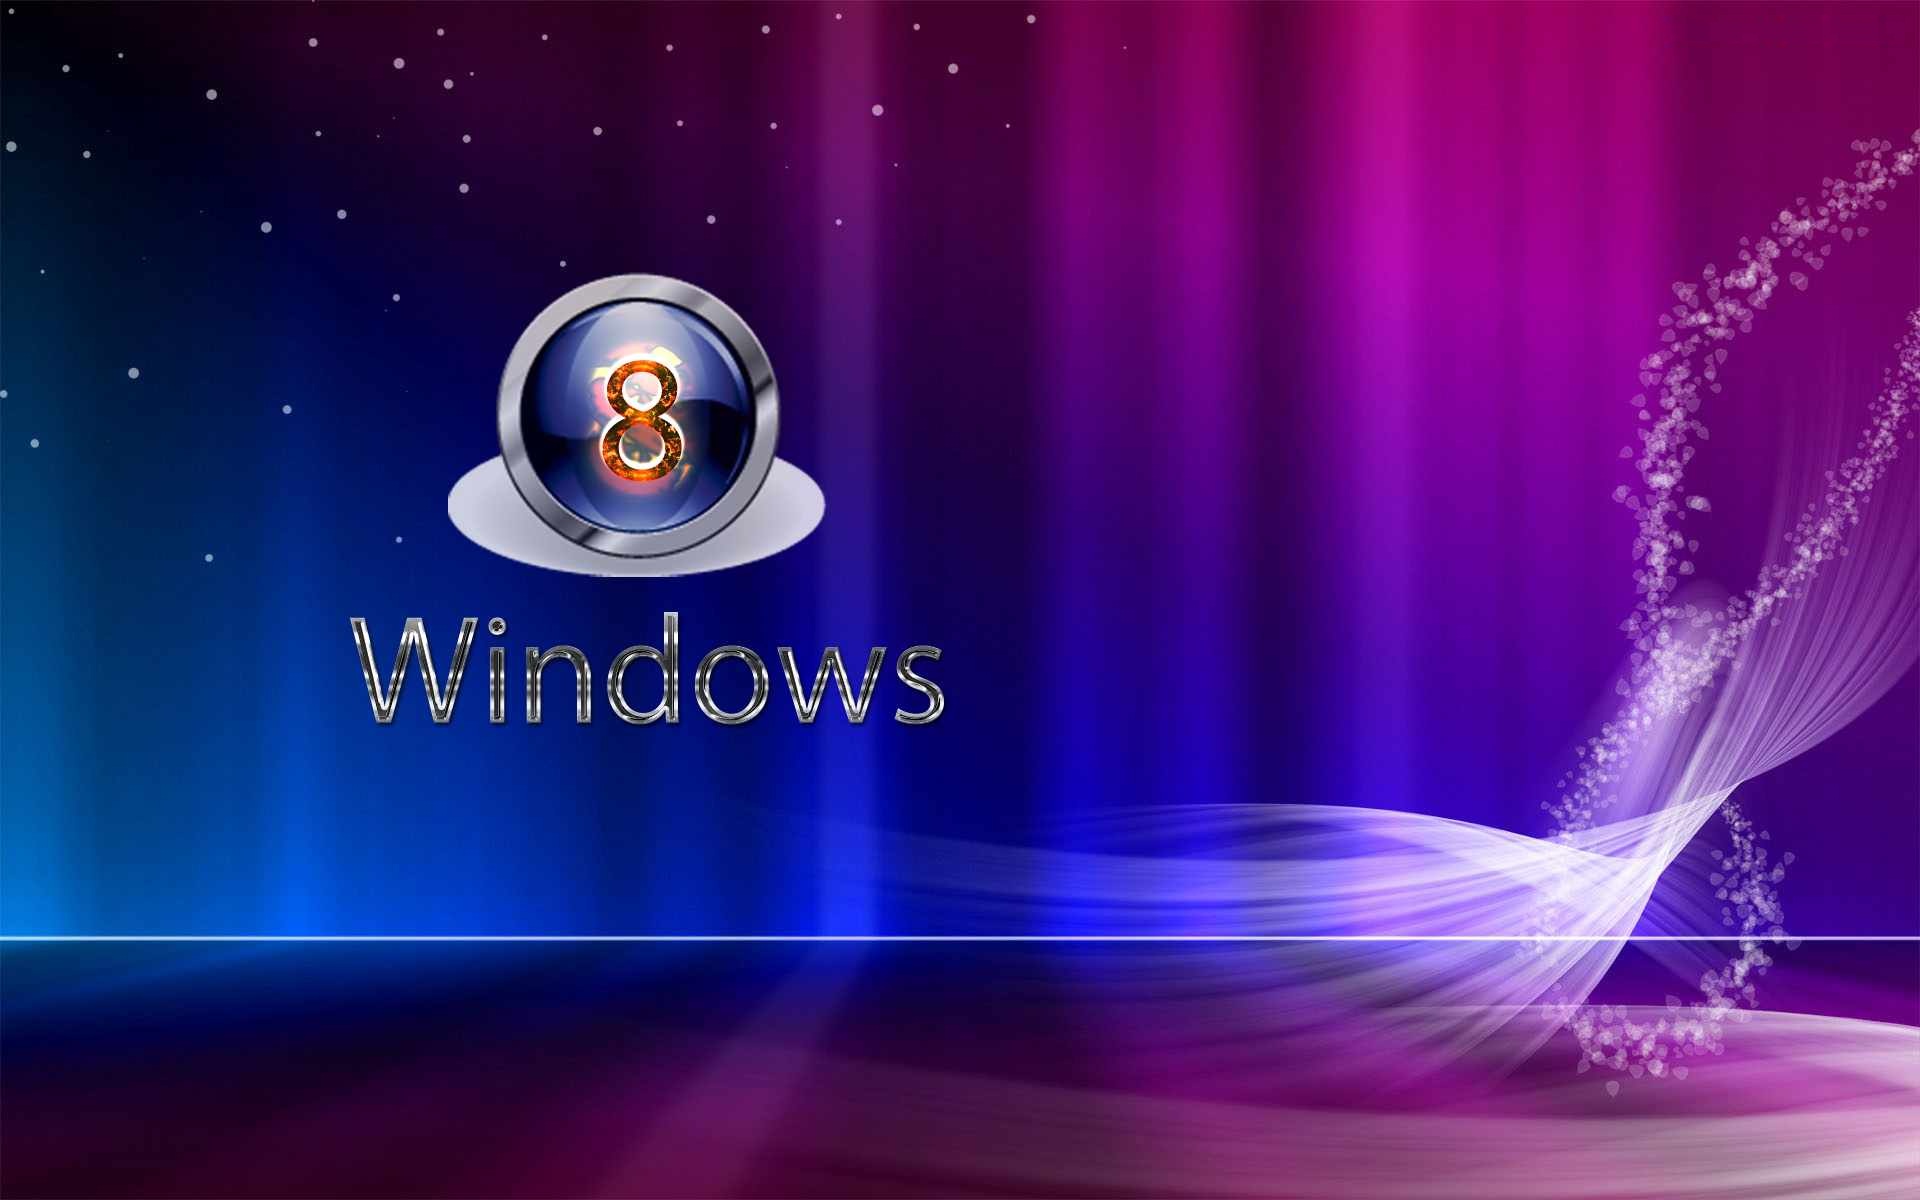 HD-Wallpapers-for-Windows-8.jpg